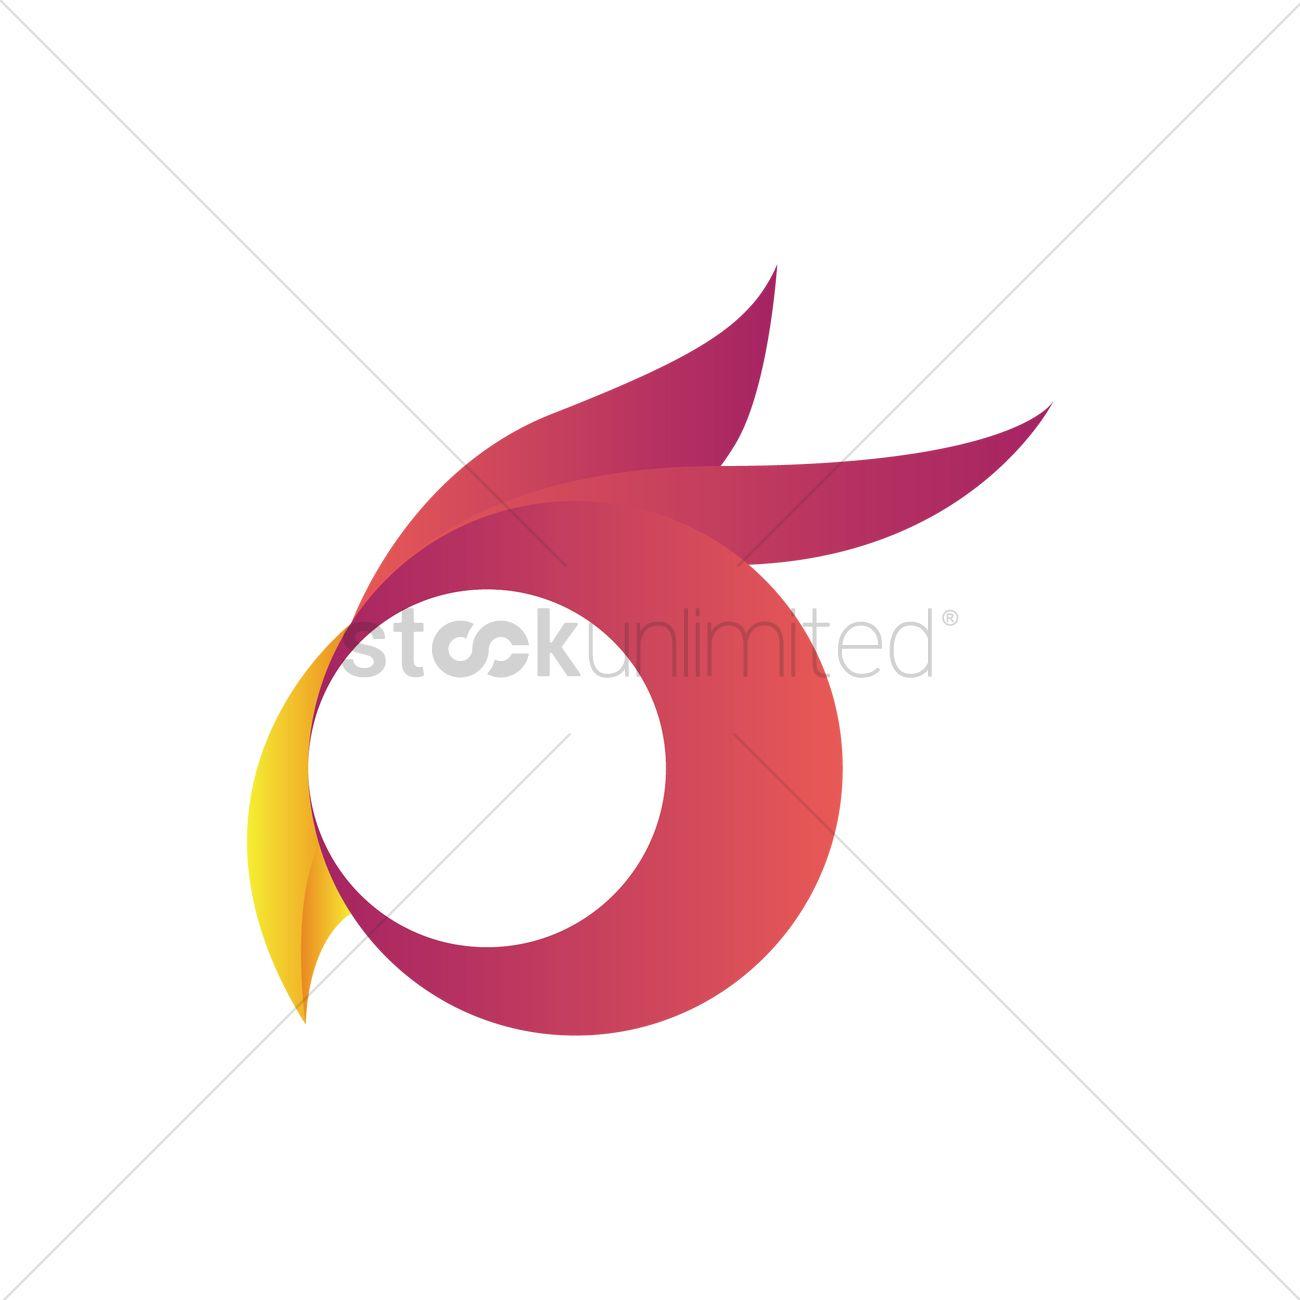 Face in Circle Logo - Bird face logo element Vector Image - 1629059 | StockUnlimited